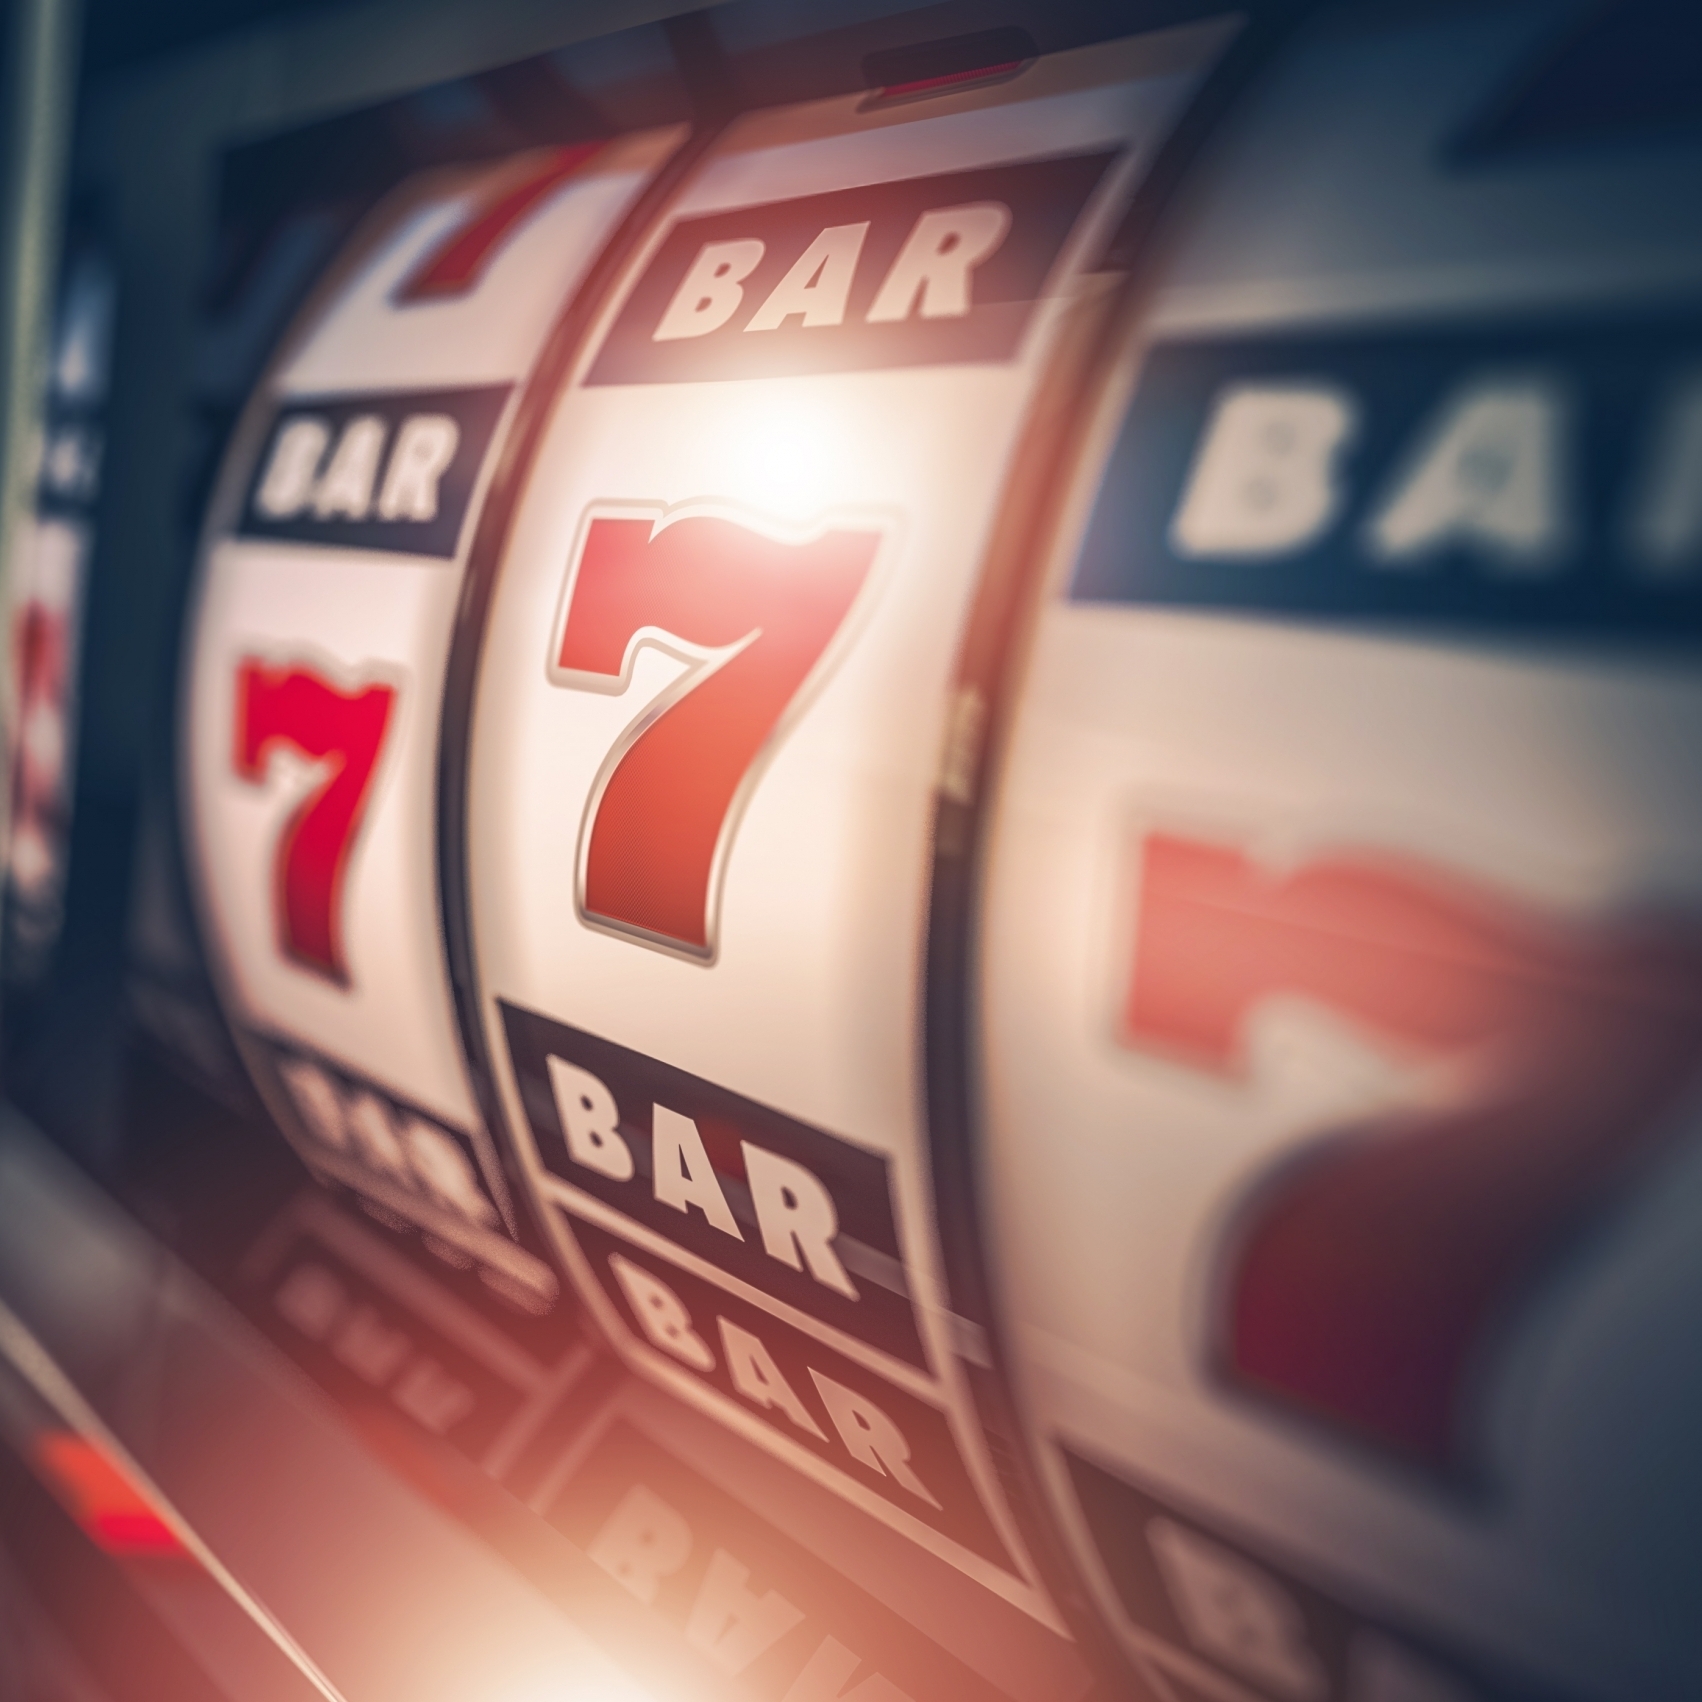 Slot machines at Scarlet Pearl Casino Resort in D'Iberville near Biloxi